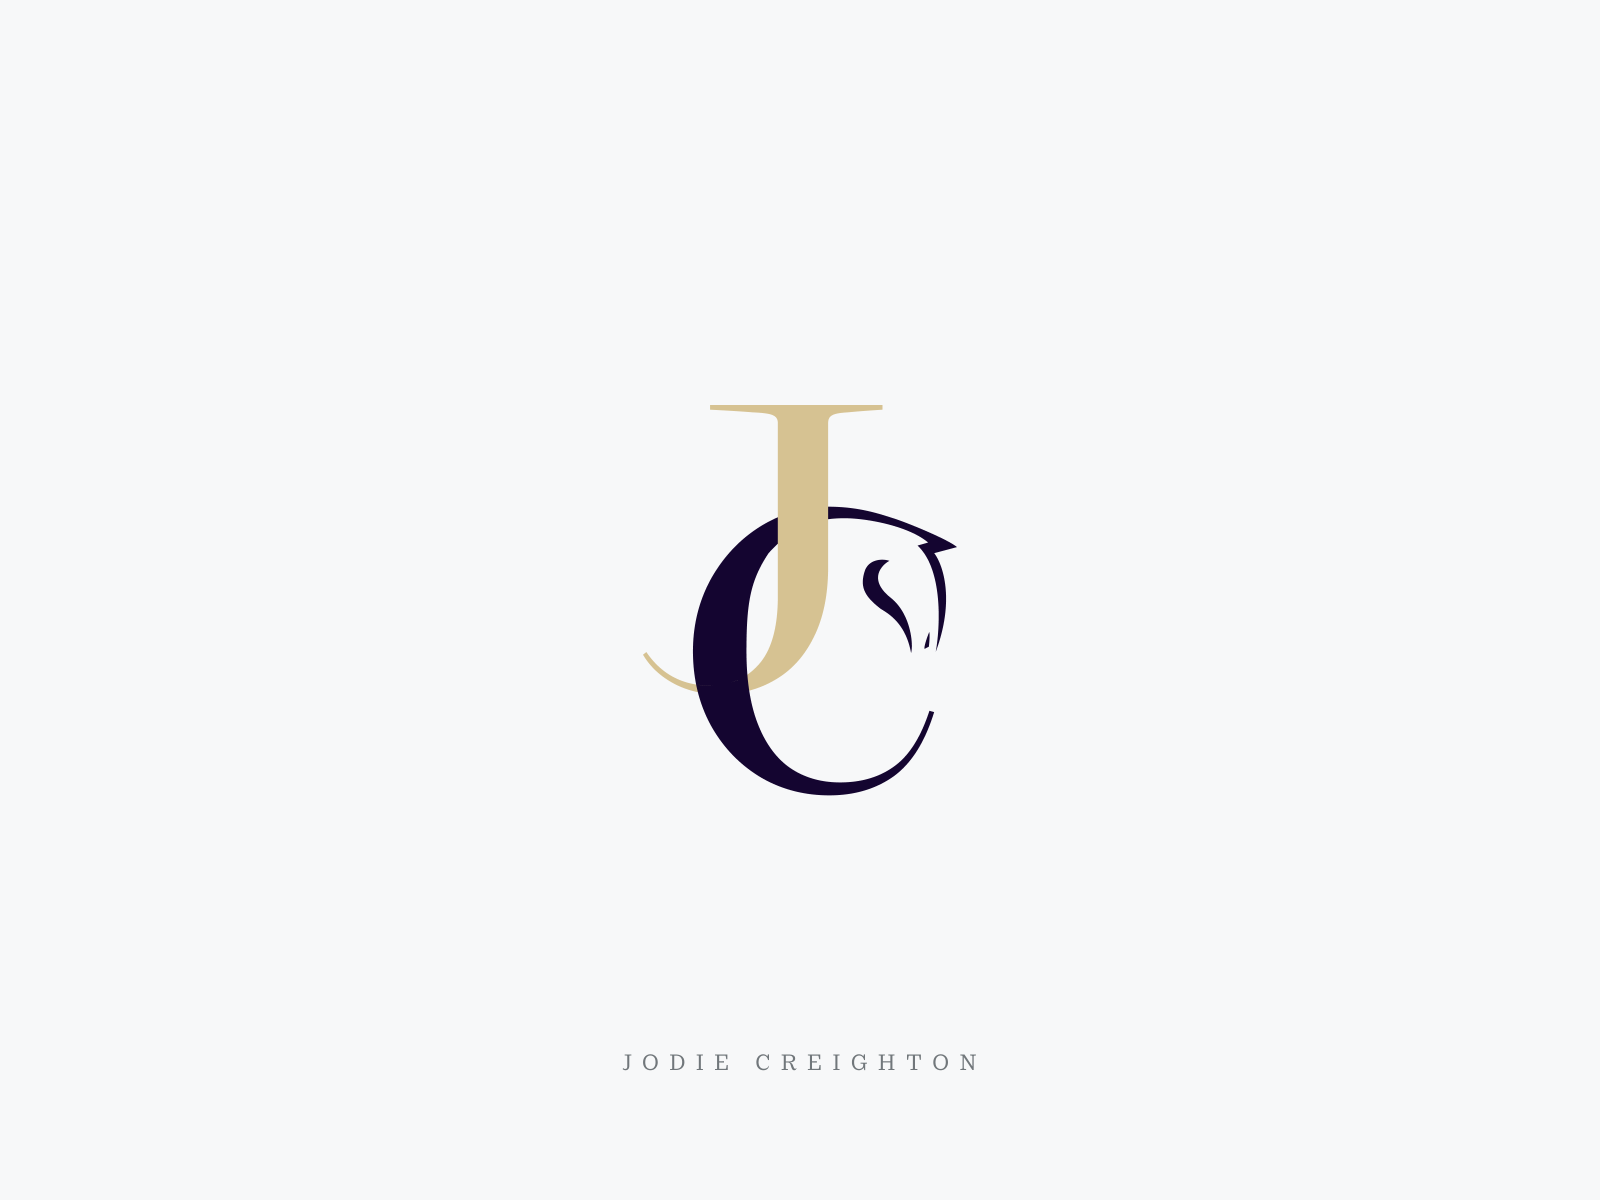 Jc j c golden letter logo design with a creative Vector Image